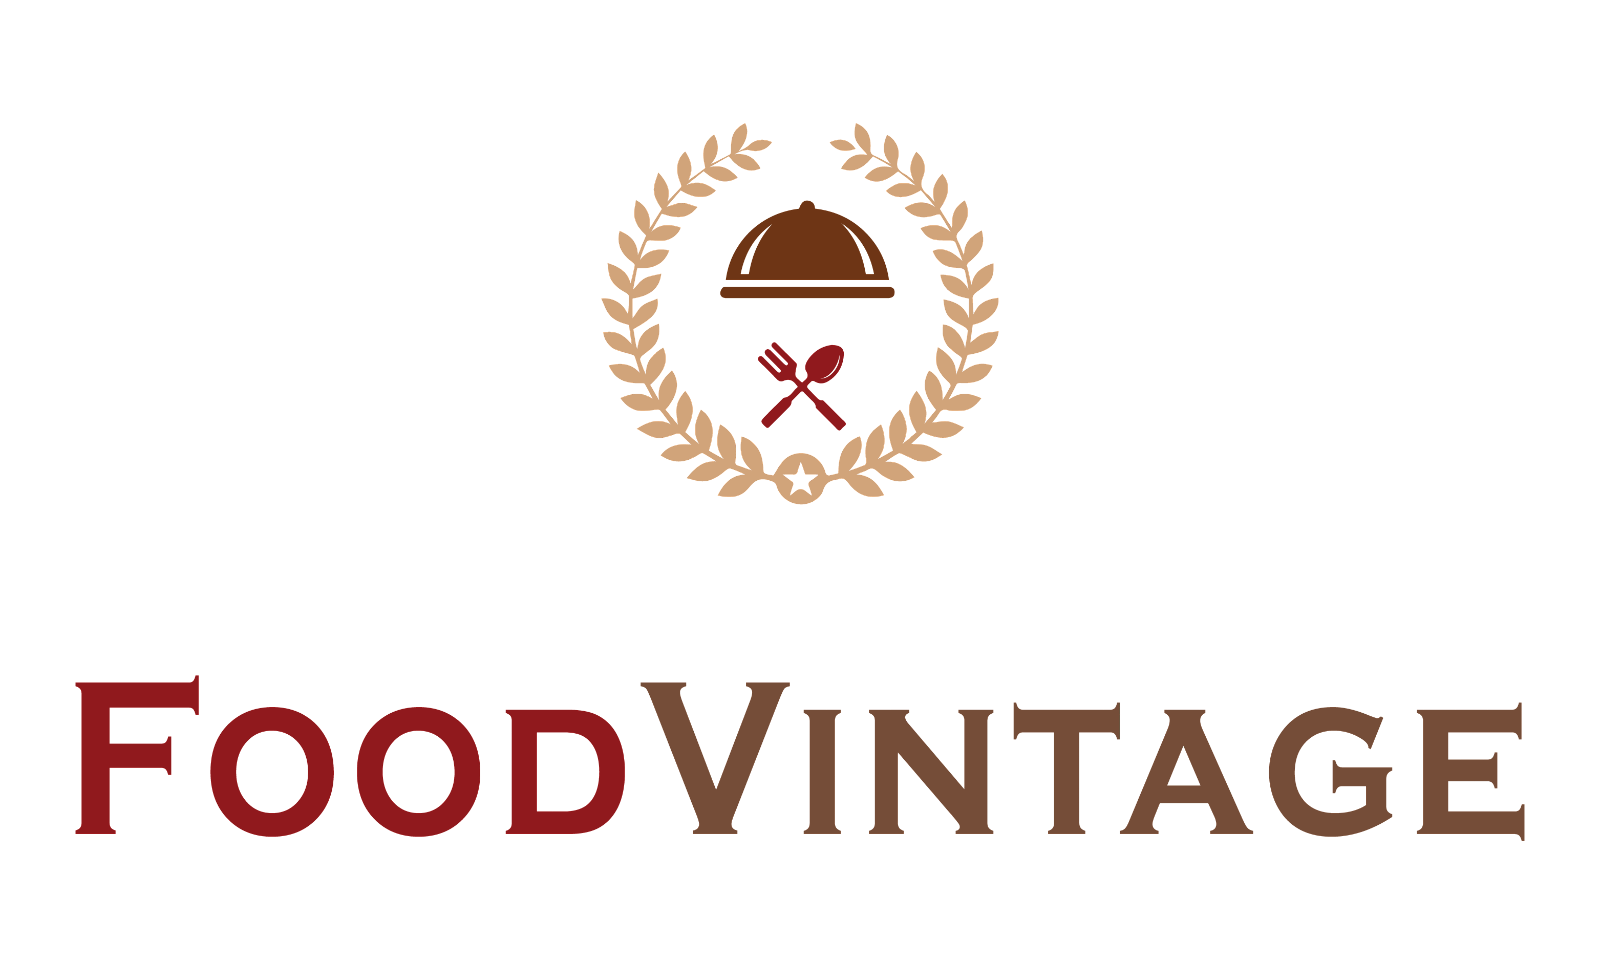 FoodVintage.com - Creative brandable domain for sale